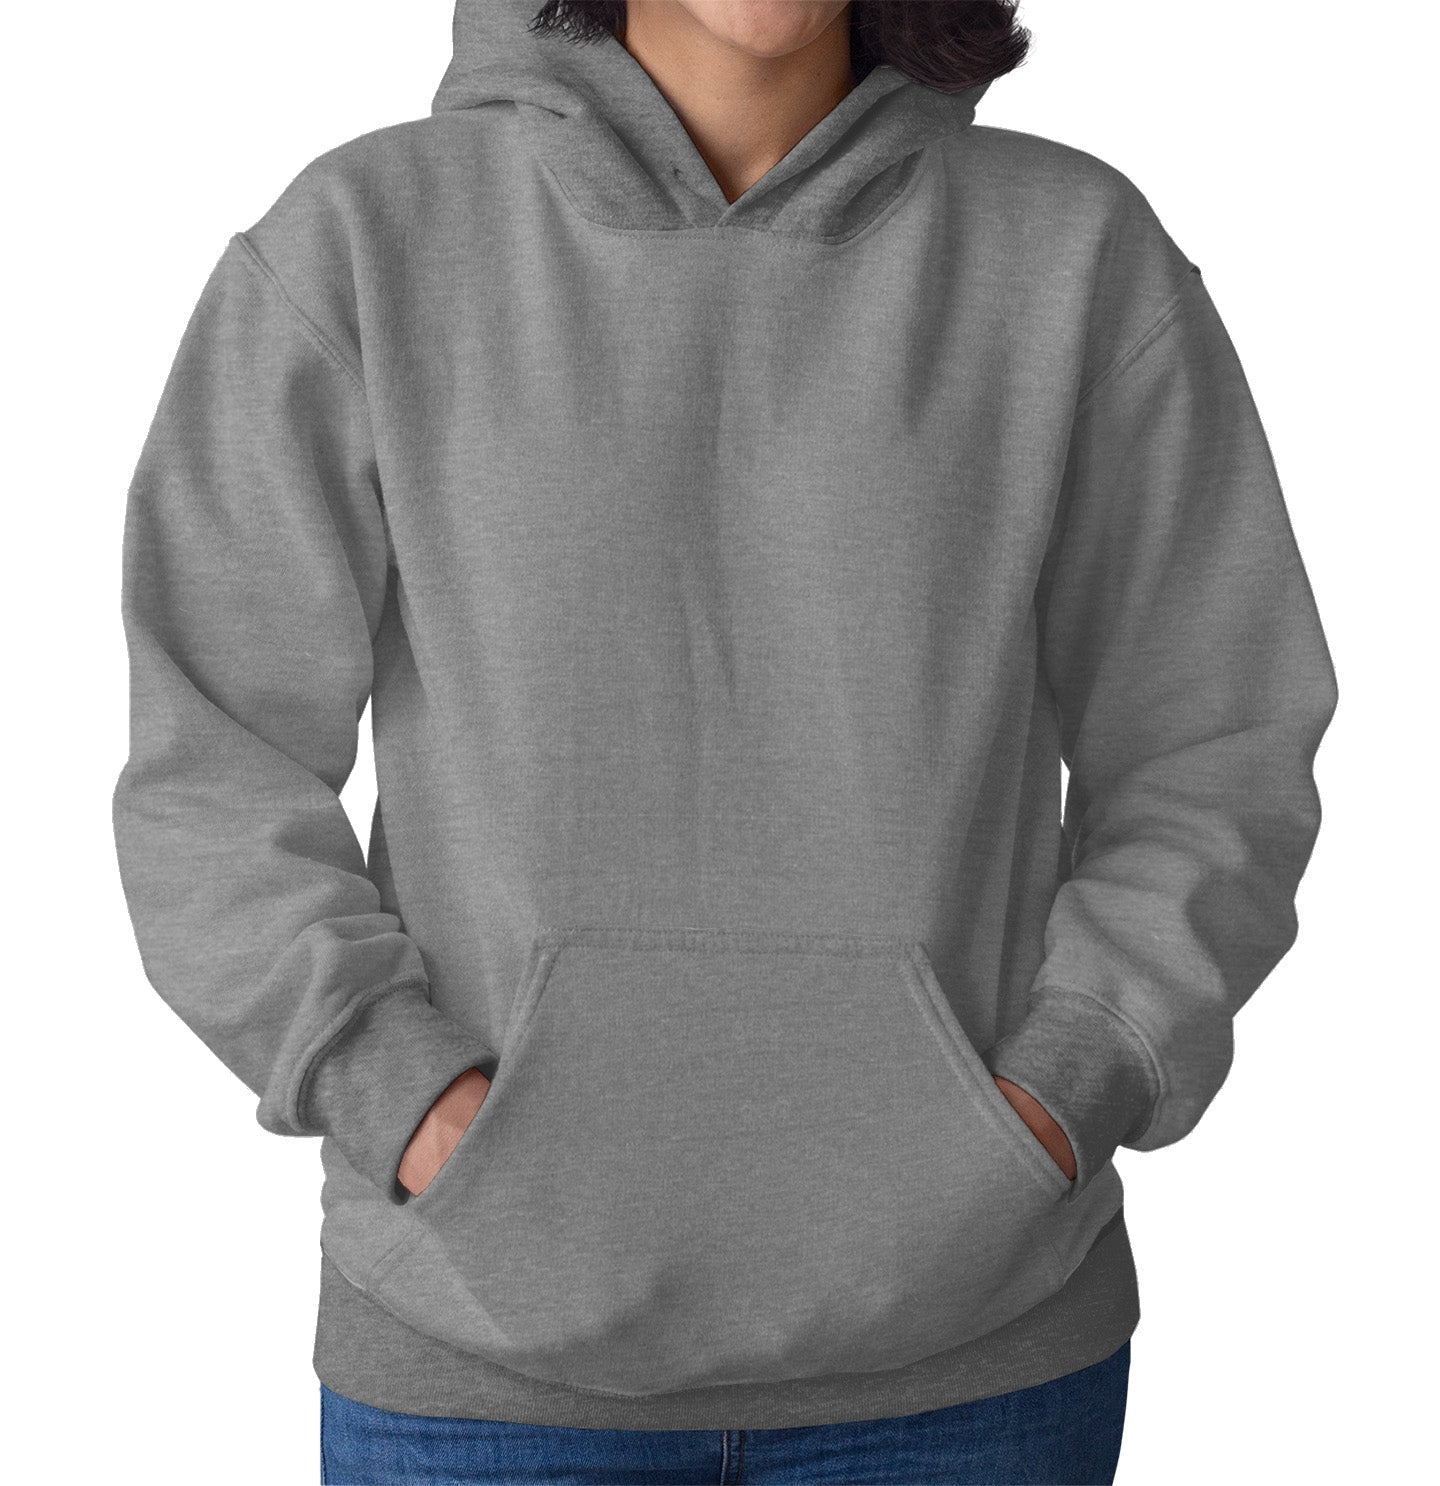 Dachshund Mom Paw Text - Personalized Custom Adult Unisex Hoodie Sweatshirt